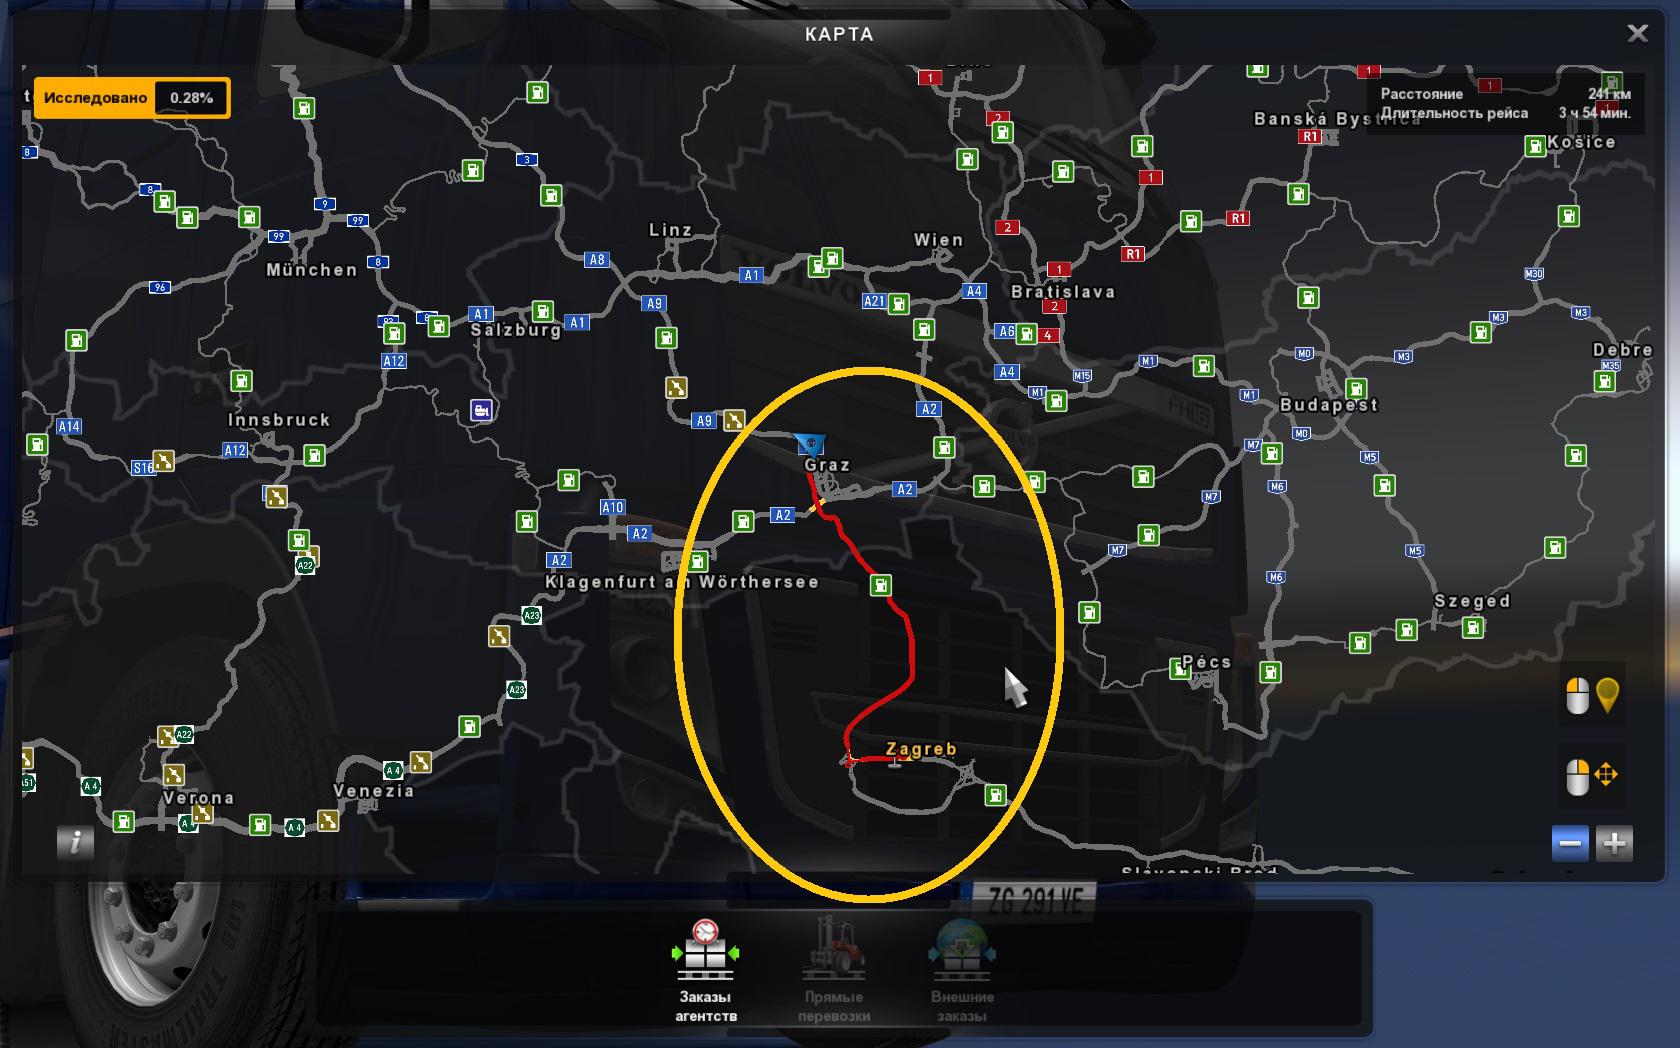 Карты етс 1.47. Етс 2 Турция. Euro Truck Simulator 2 карта. Карта Турции ETS 2. Карта Georgia ETS 2.